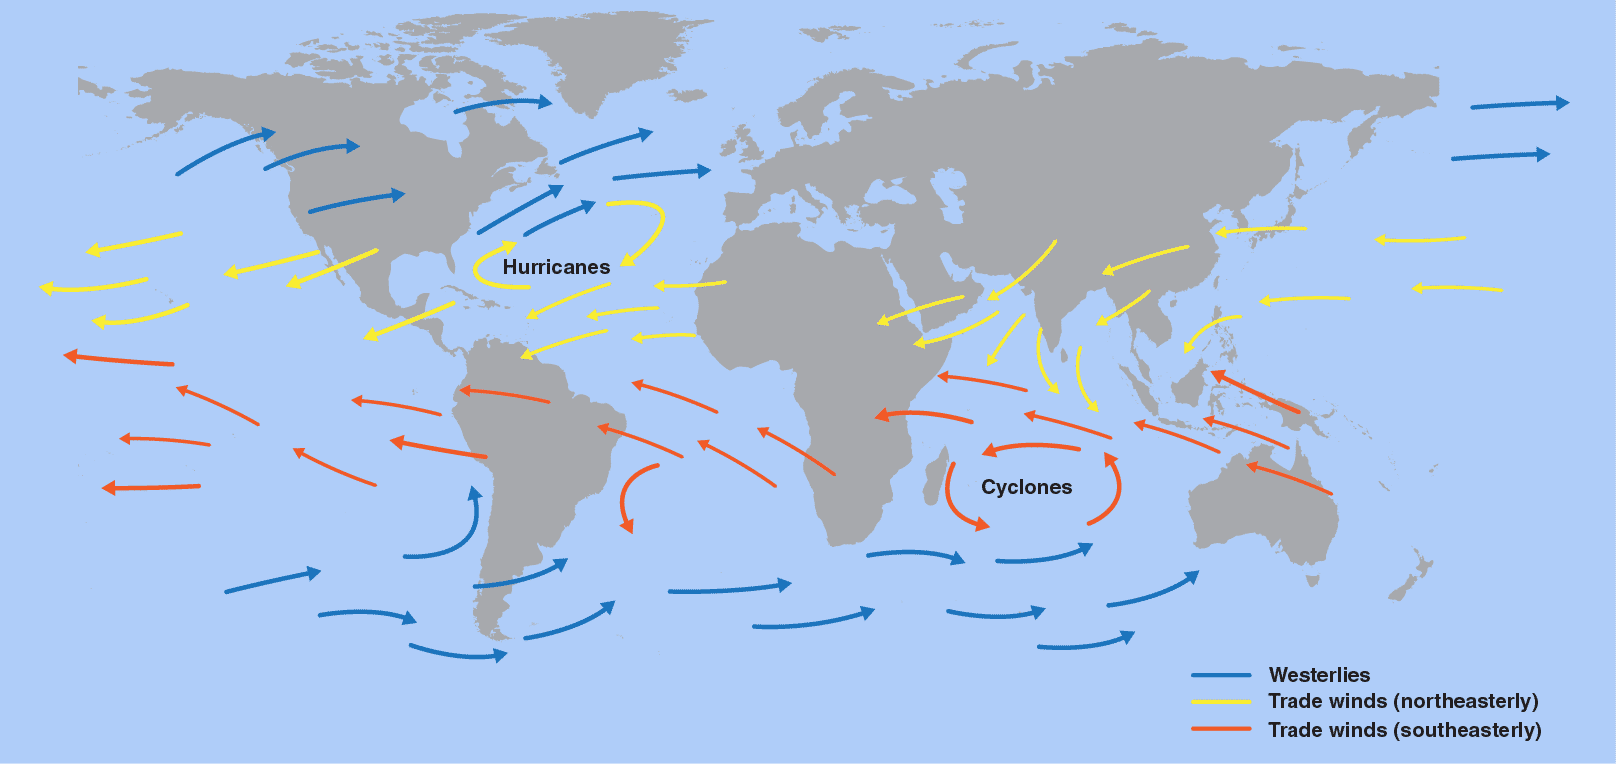 global-trade-winds-map-pressure-atlantic-ocean-seasonal-weather-anomaly-long-term-hurricane-season-winter-forecast